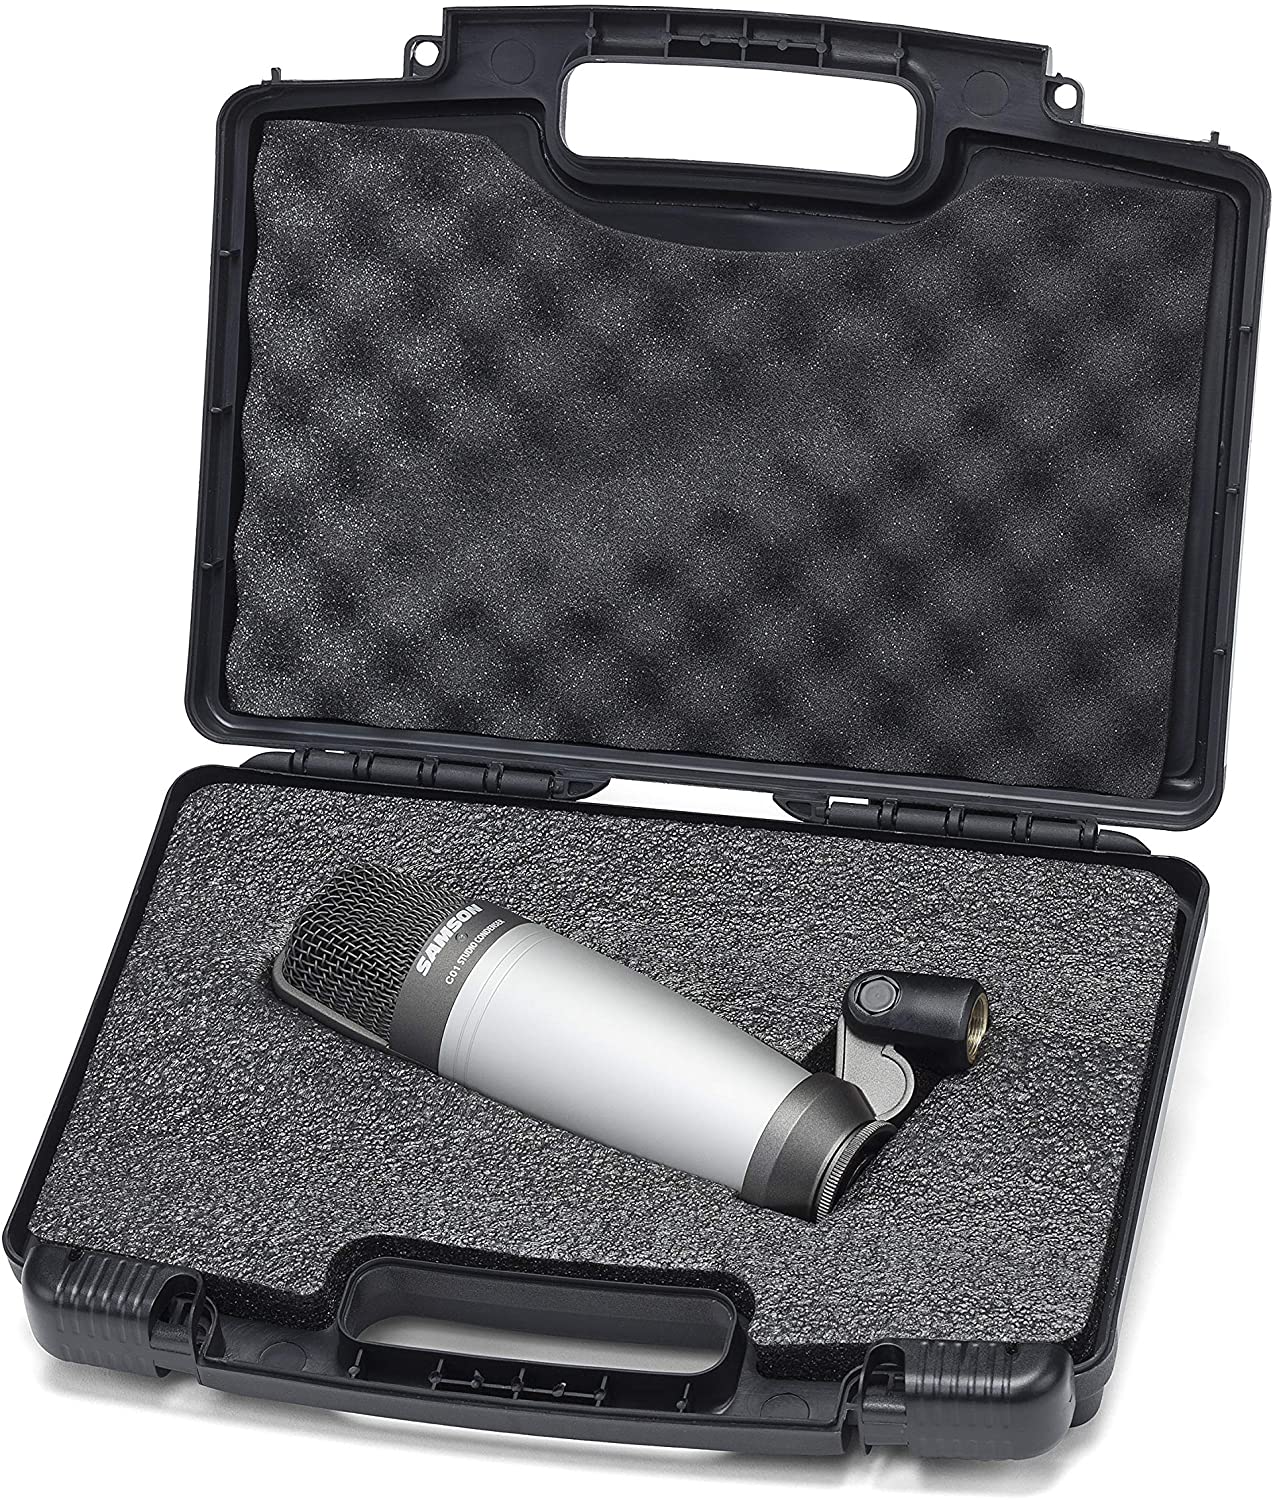 Samson C01 Large-Diaphragm Cardioid Studio Condenser Microphone - Pro-Distributing